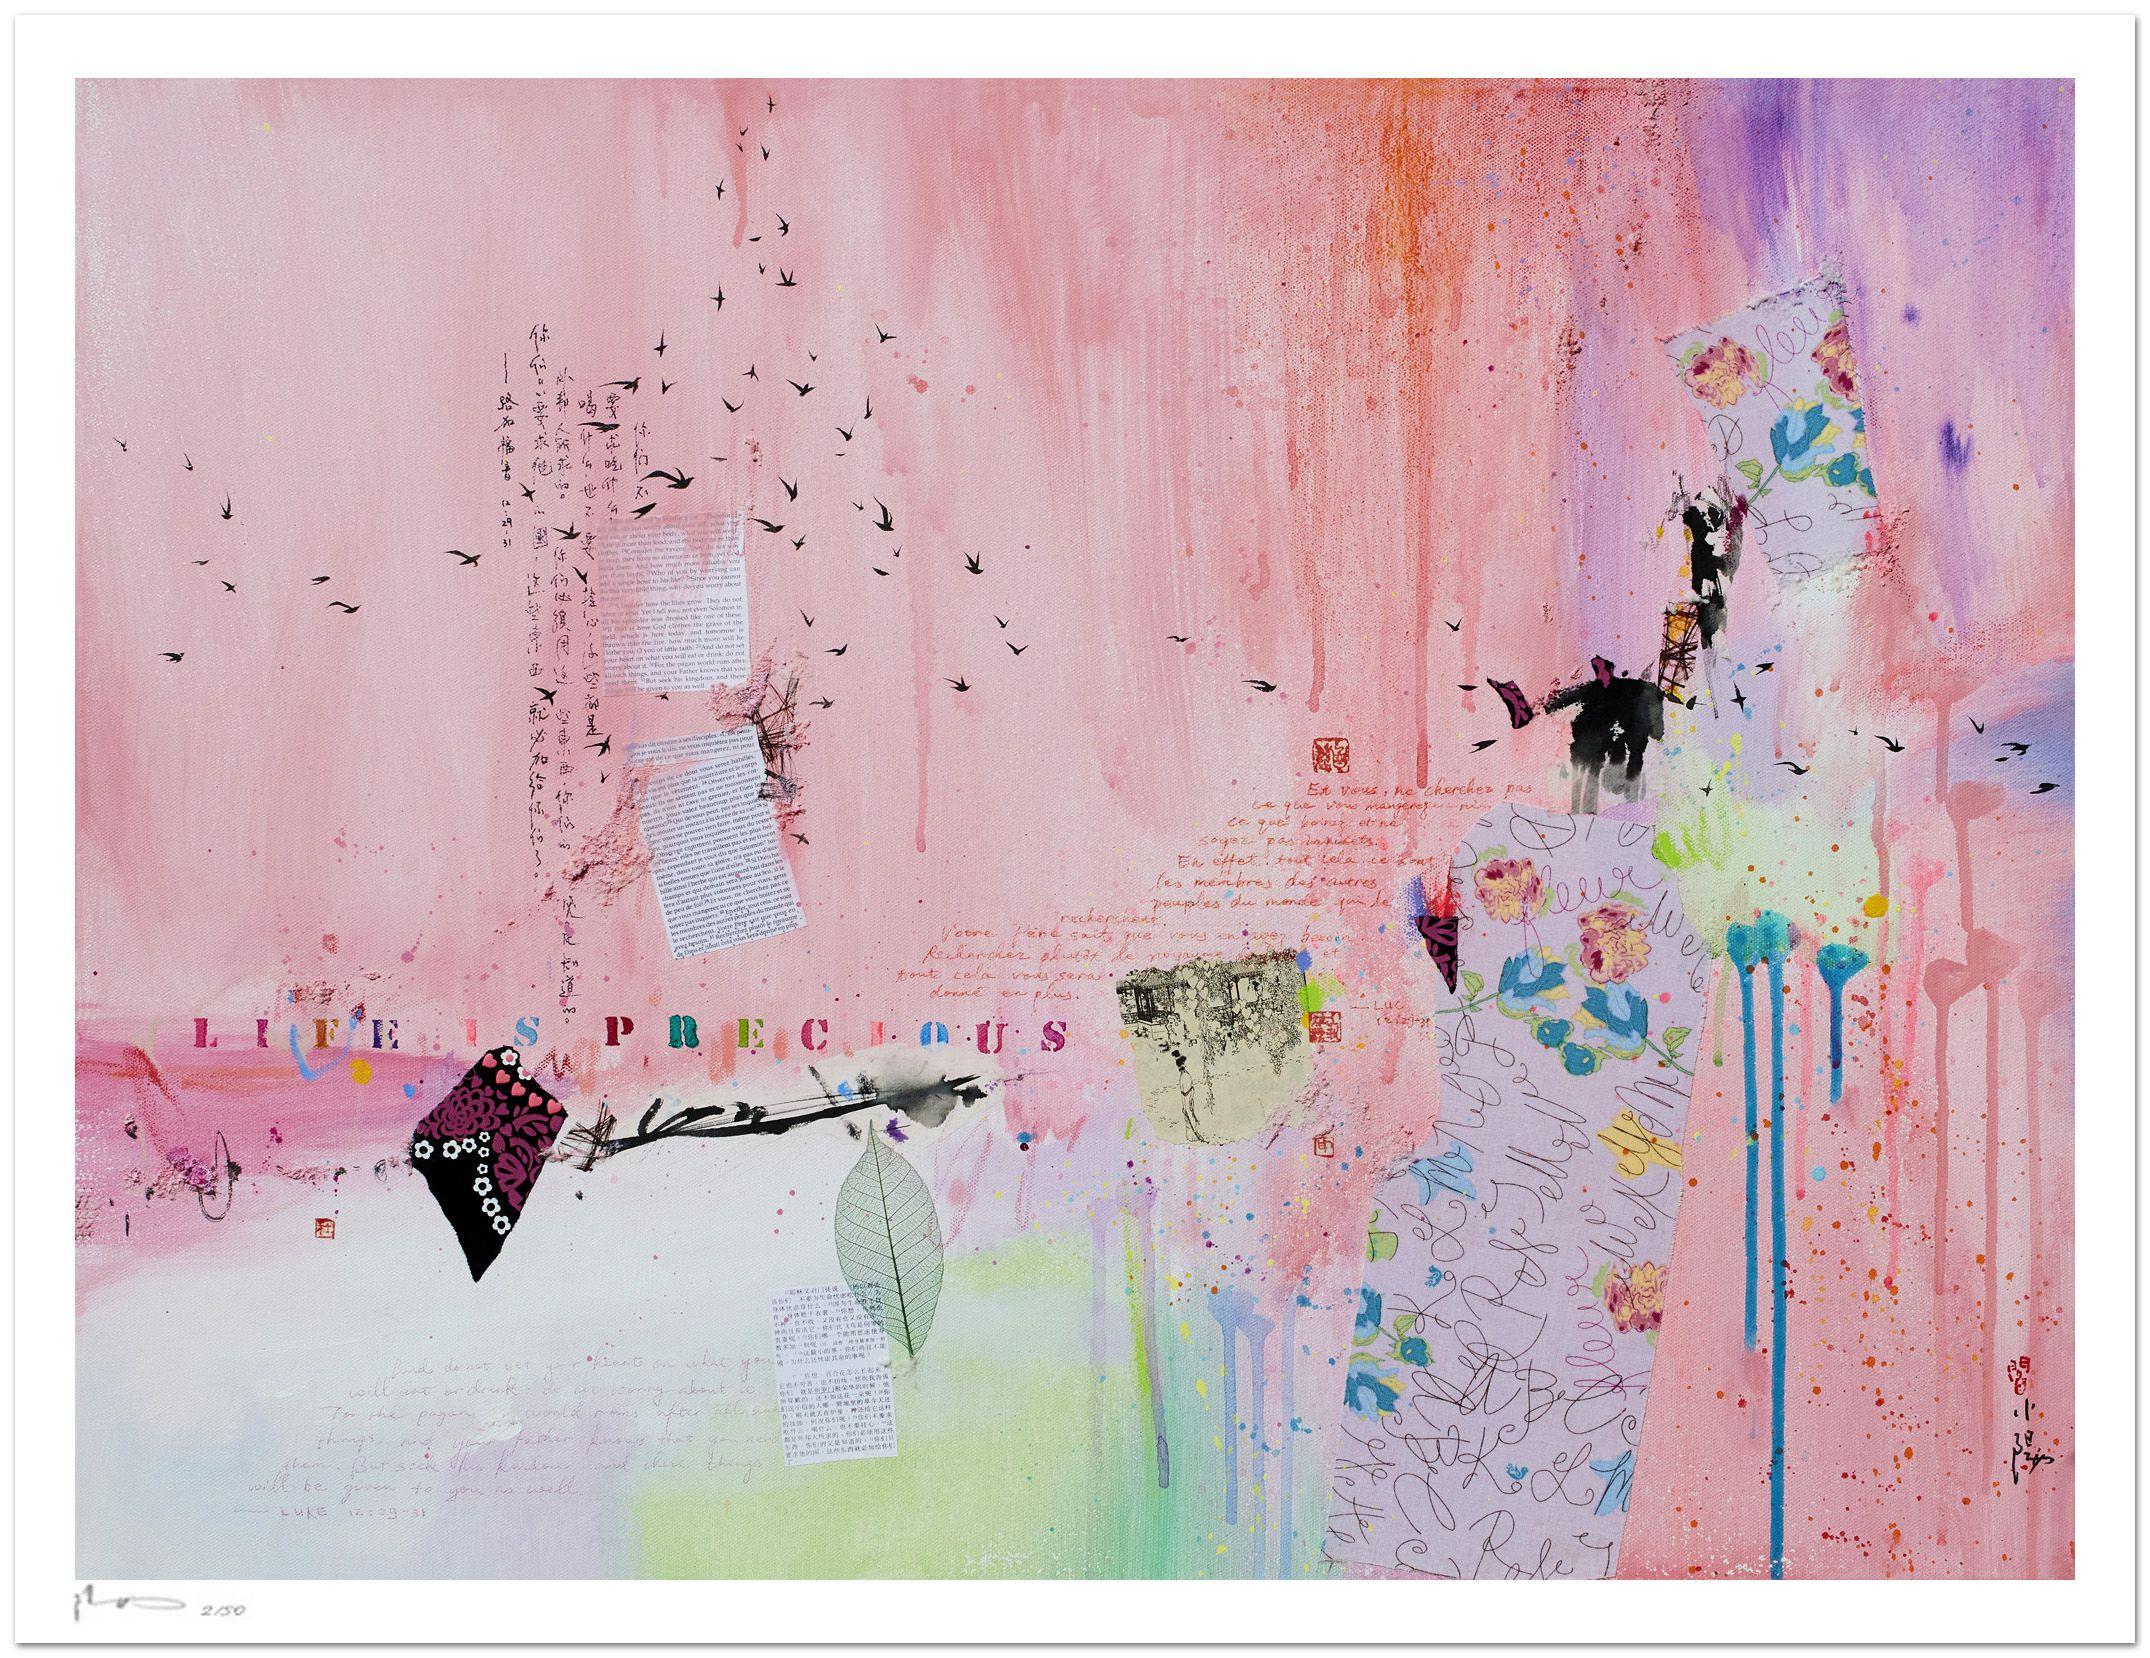 Xiaoyang Galas Abstract Print - Life is precious VIII - Fine art print, Digital on Paper